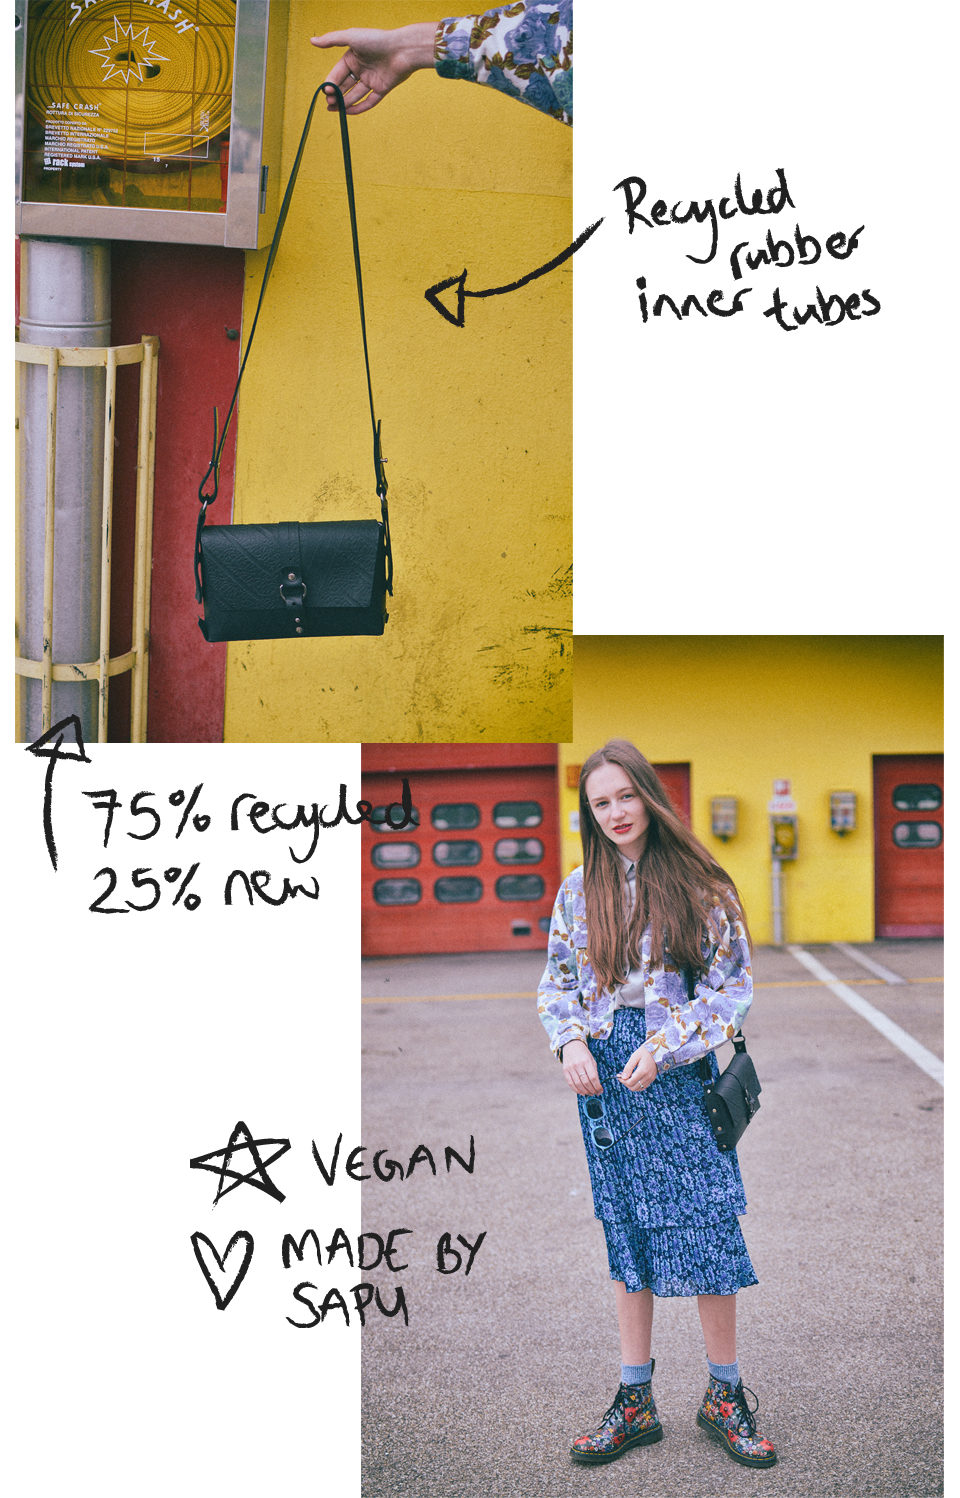 sustainable vegan leather alternatives - paguro upcycle rubber handbag